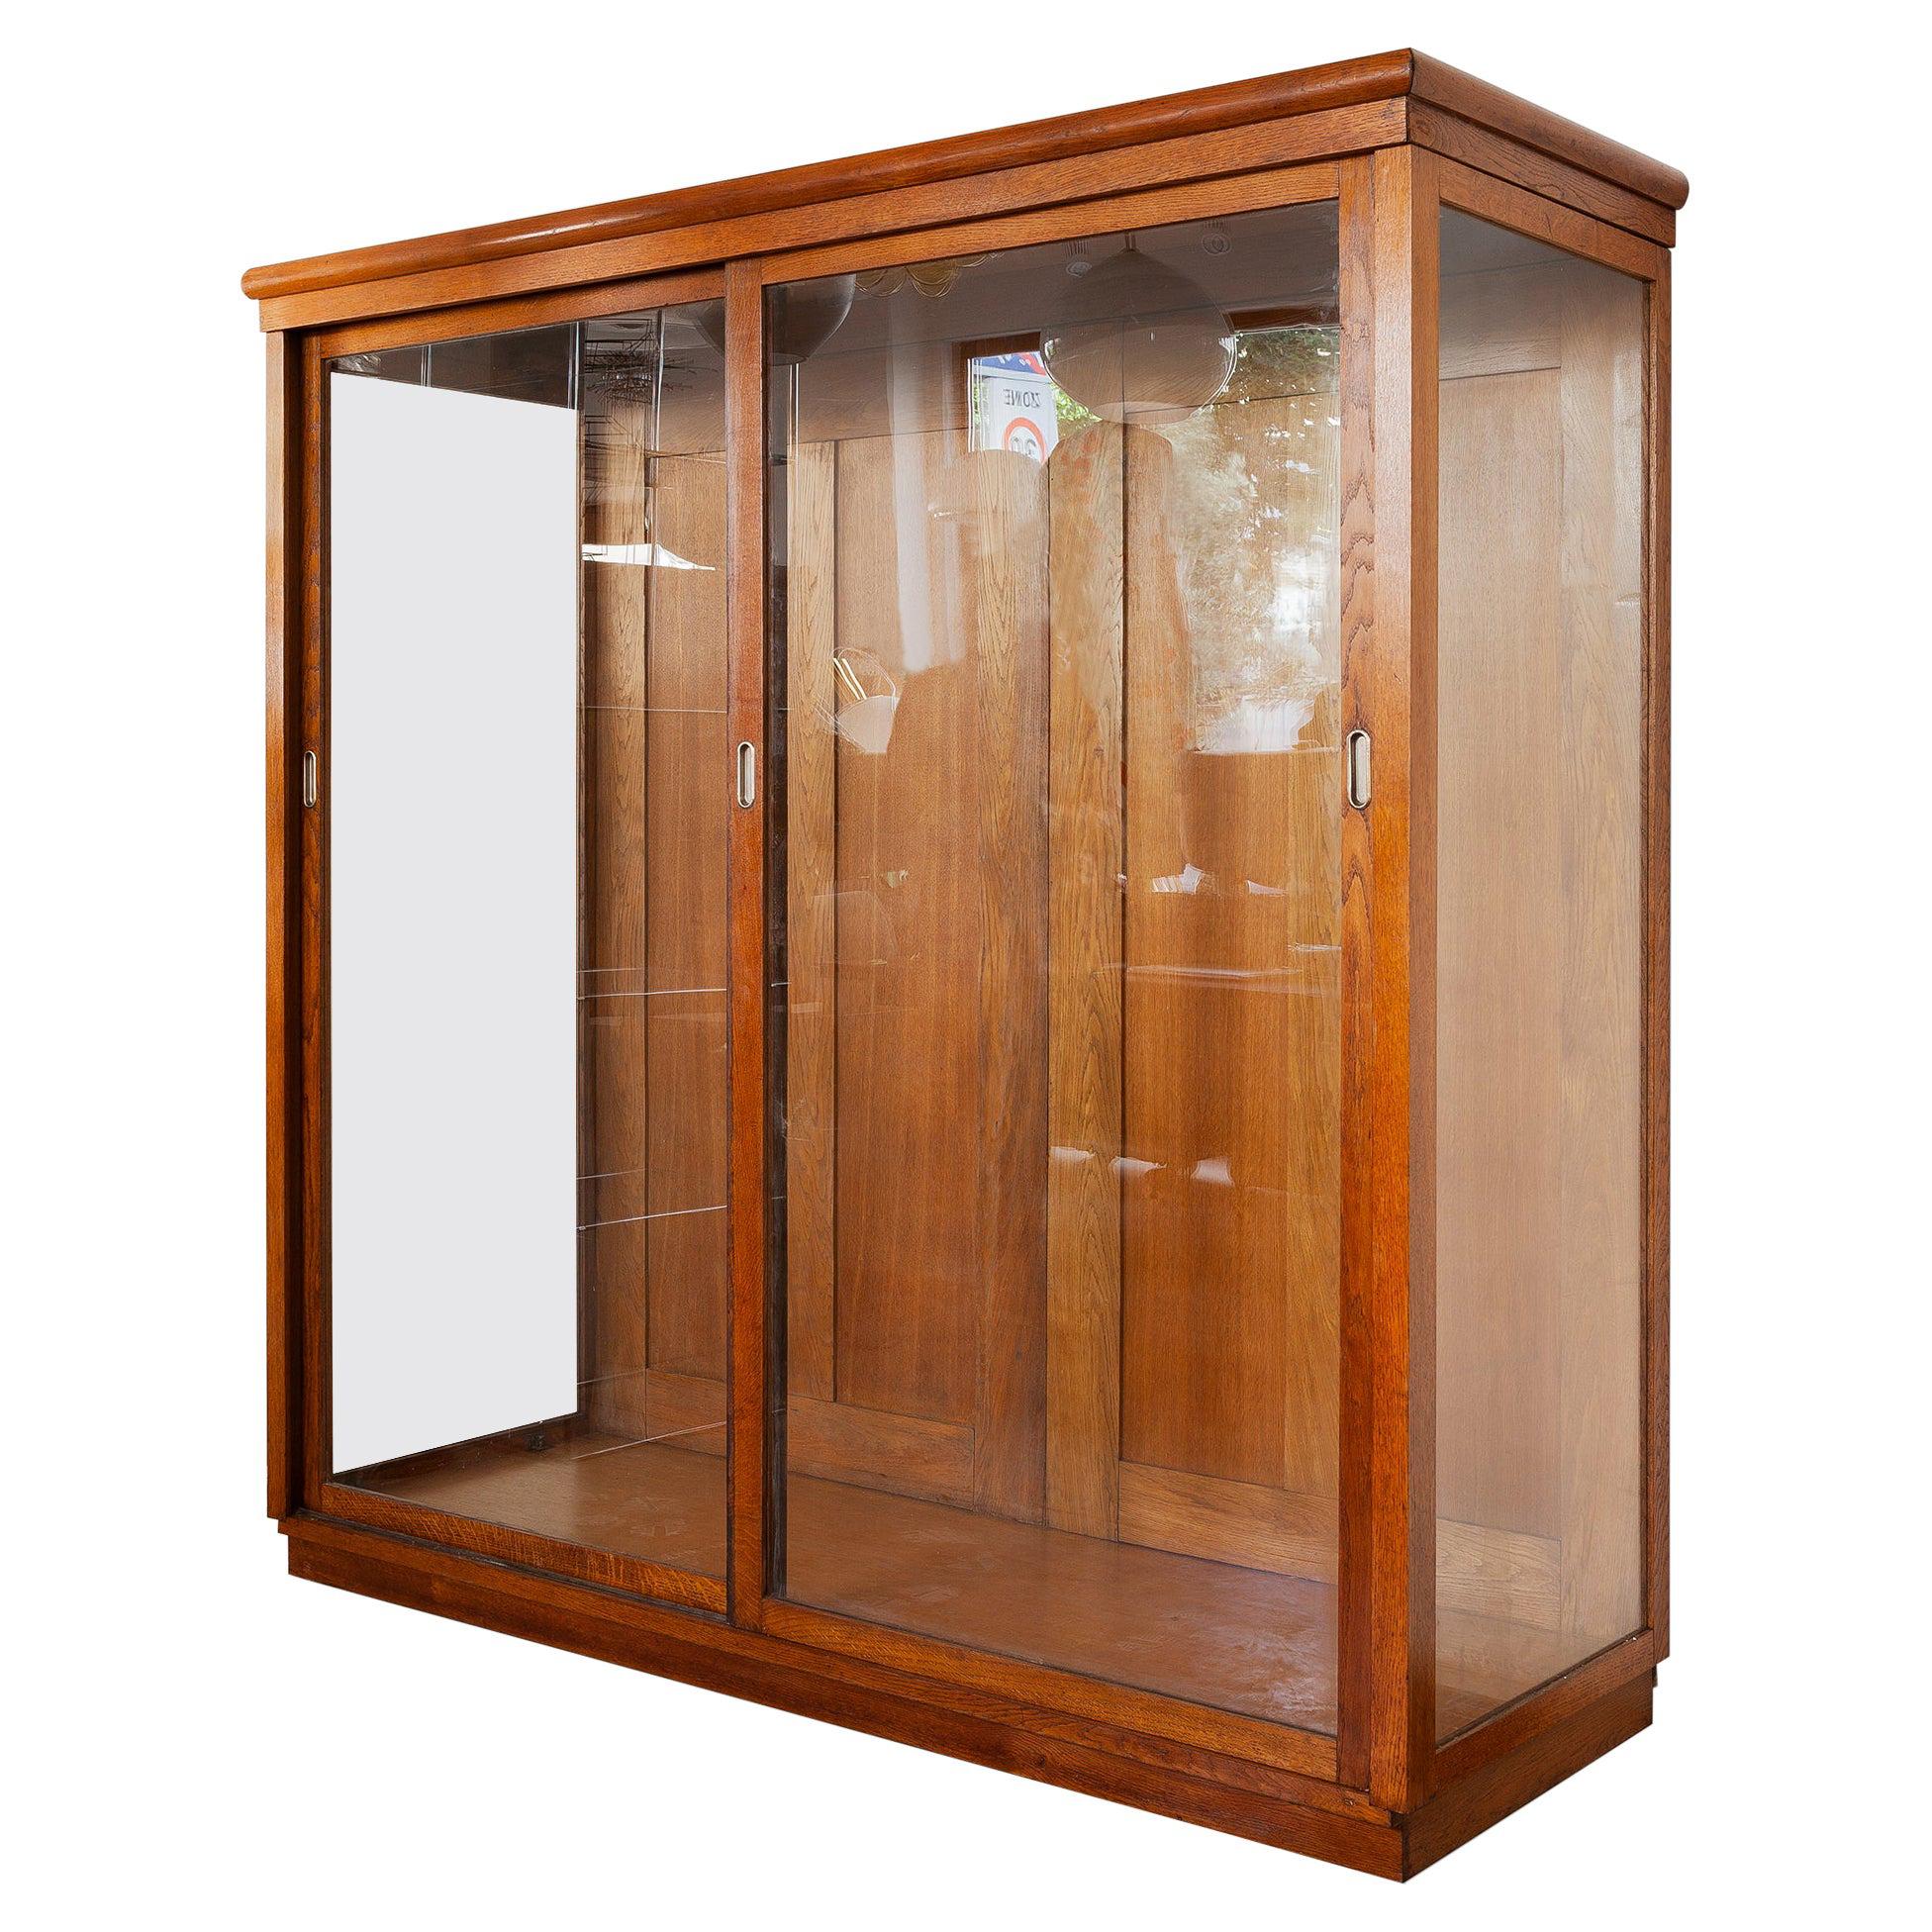 Art Deco Vitrine Display Cabinet a Cabinet of Curiosities, Wardrobe or Showcase